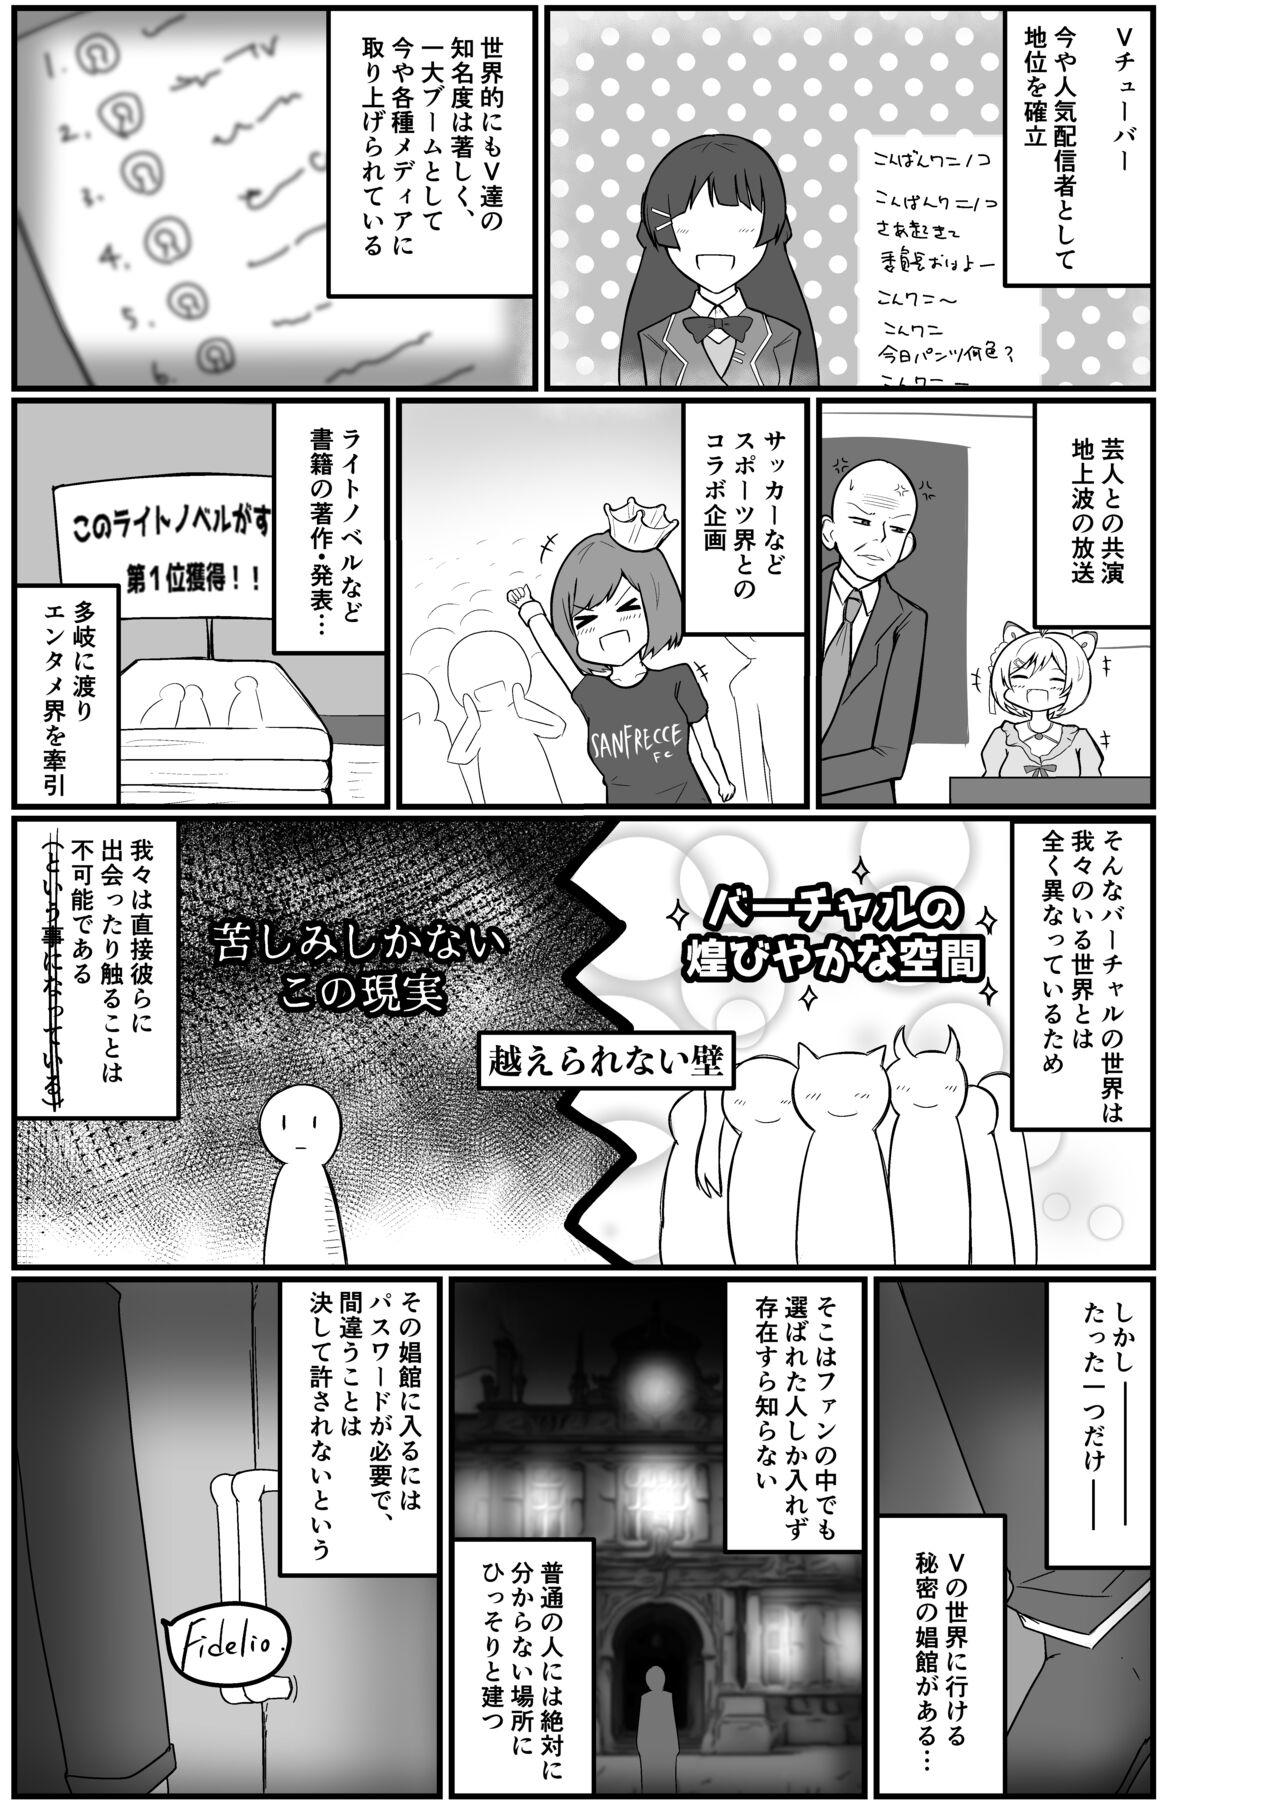 Sixtynine Niji ka Sanji no Danshou Senmonkan - Nijisanji Pendeja - Page 2